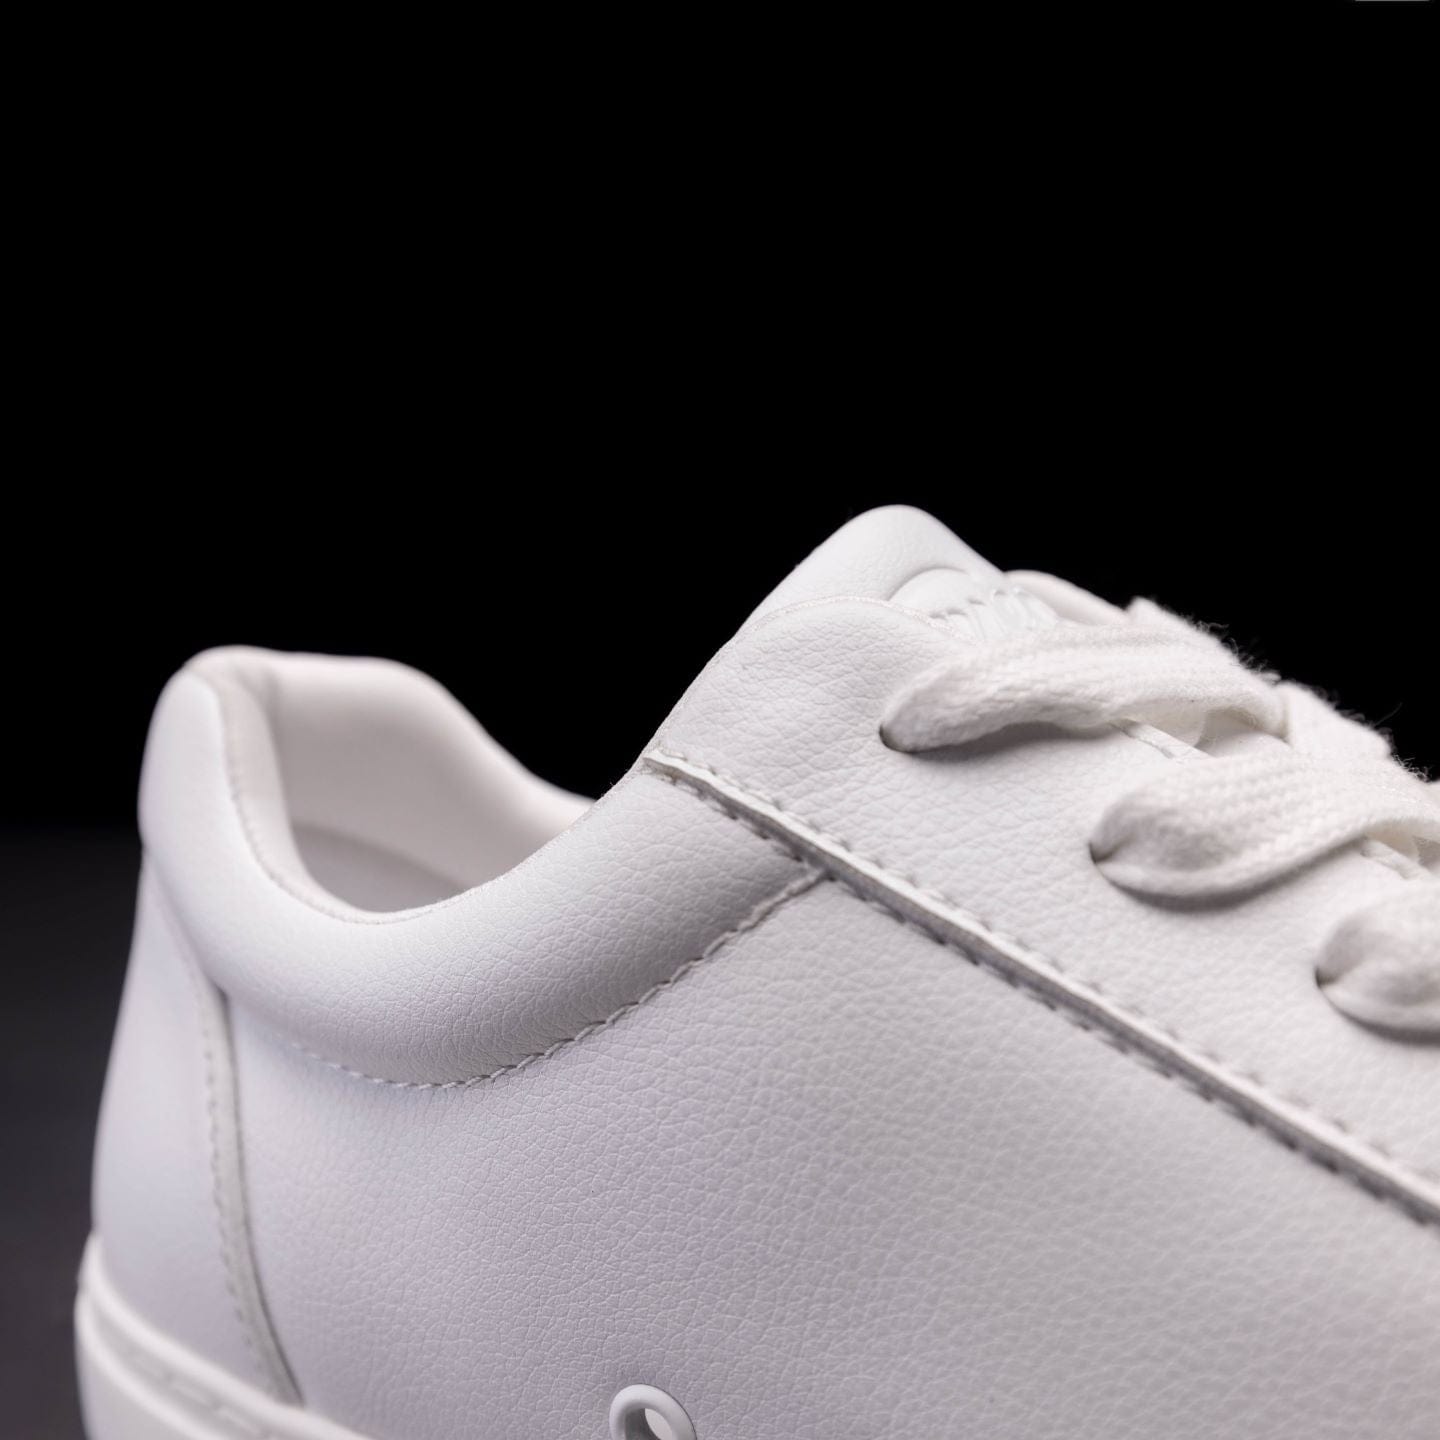 LOUIS VUITTON Mens Sneakers Dark Blue/White Leather 8.5 UK/9.5 US Ret  $1,500